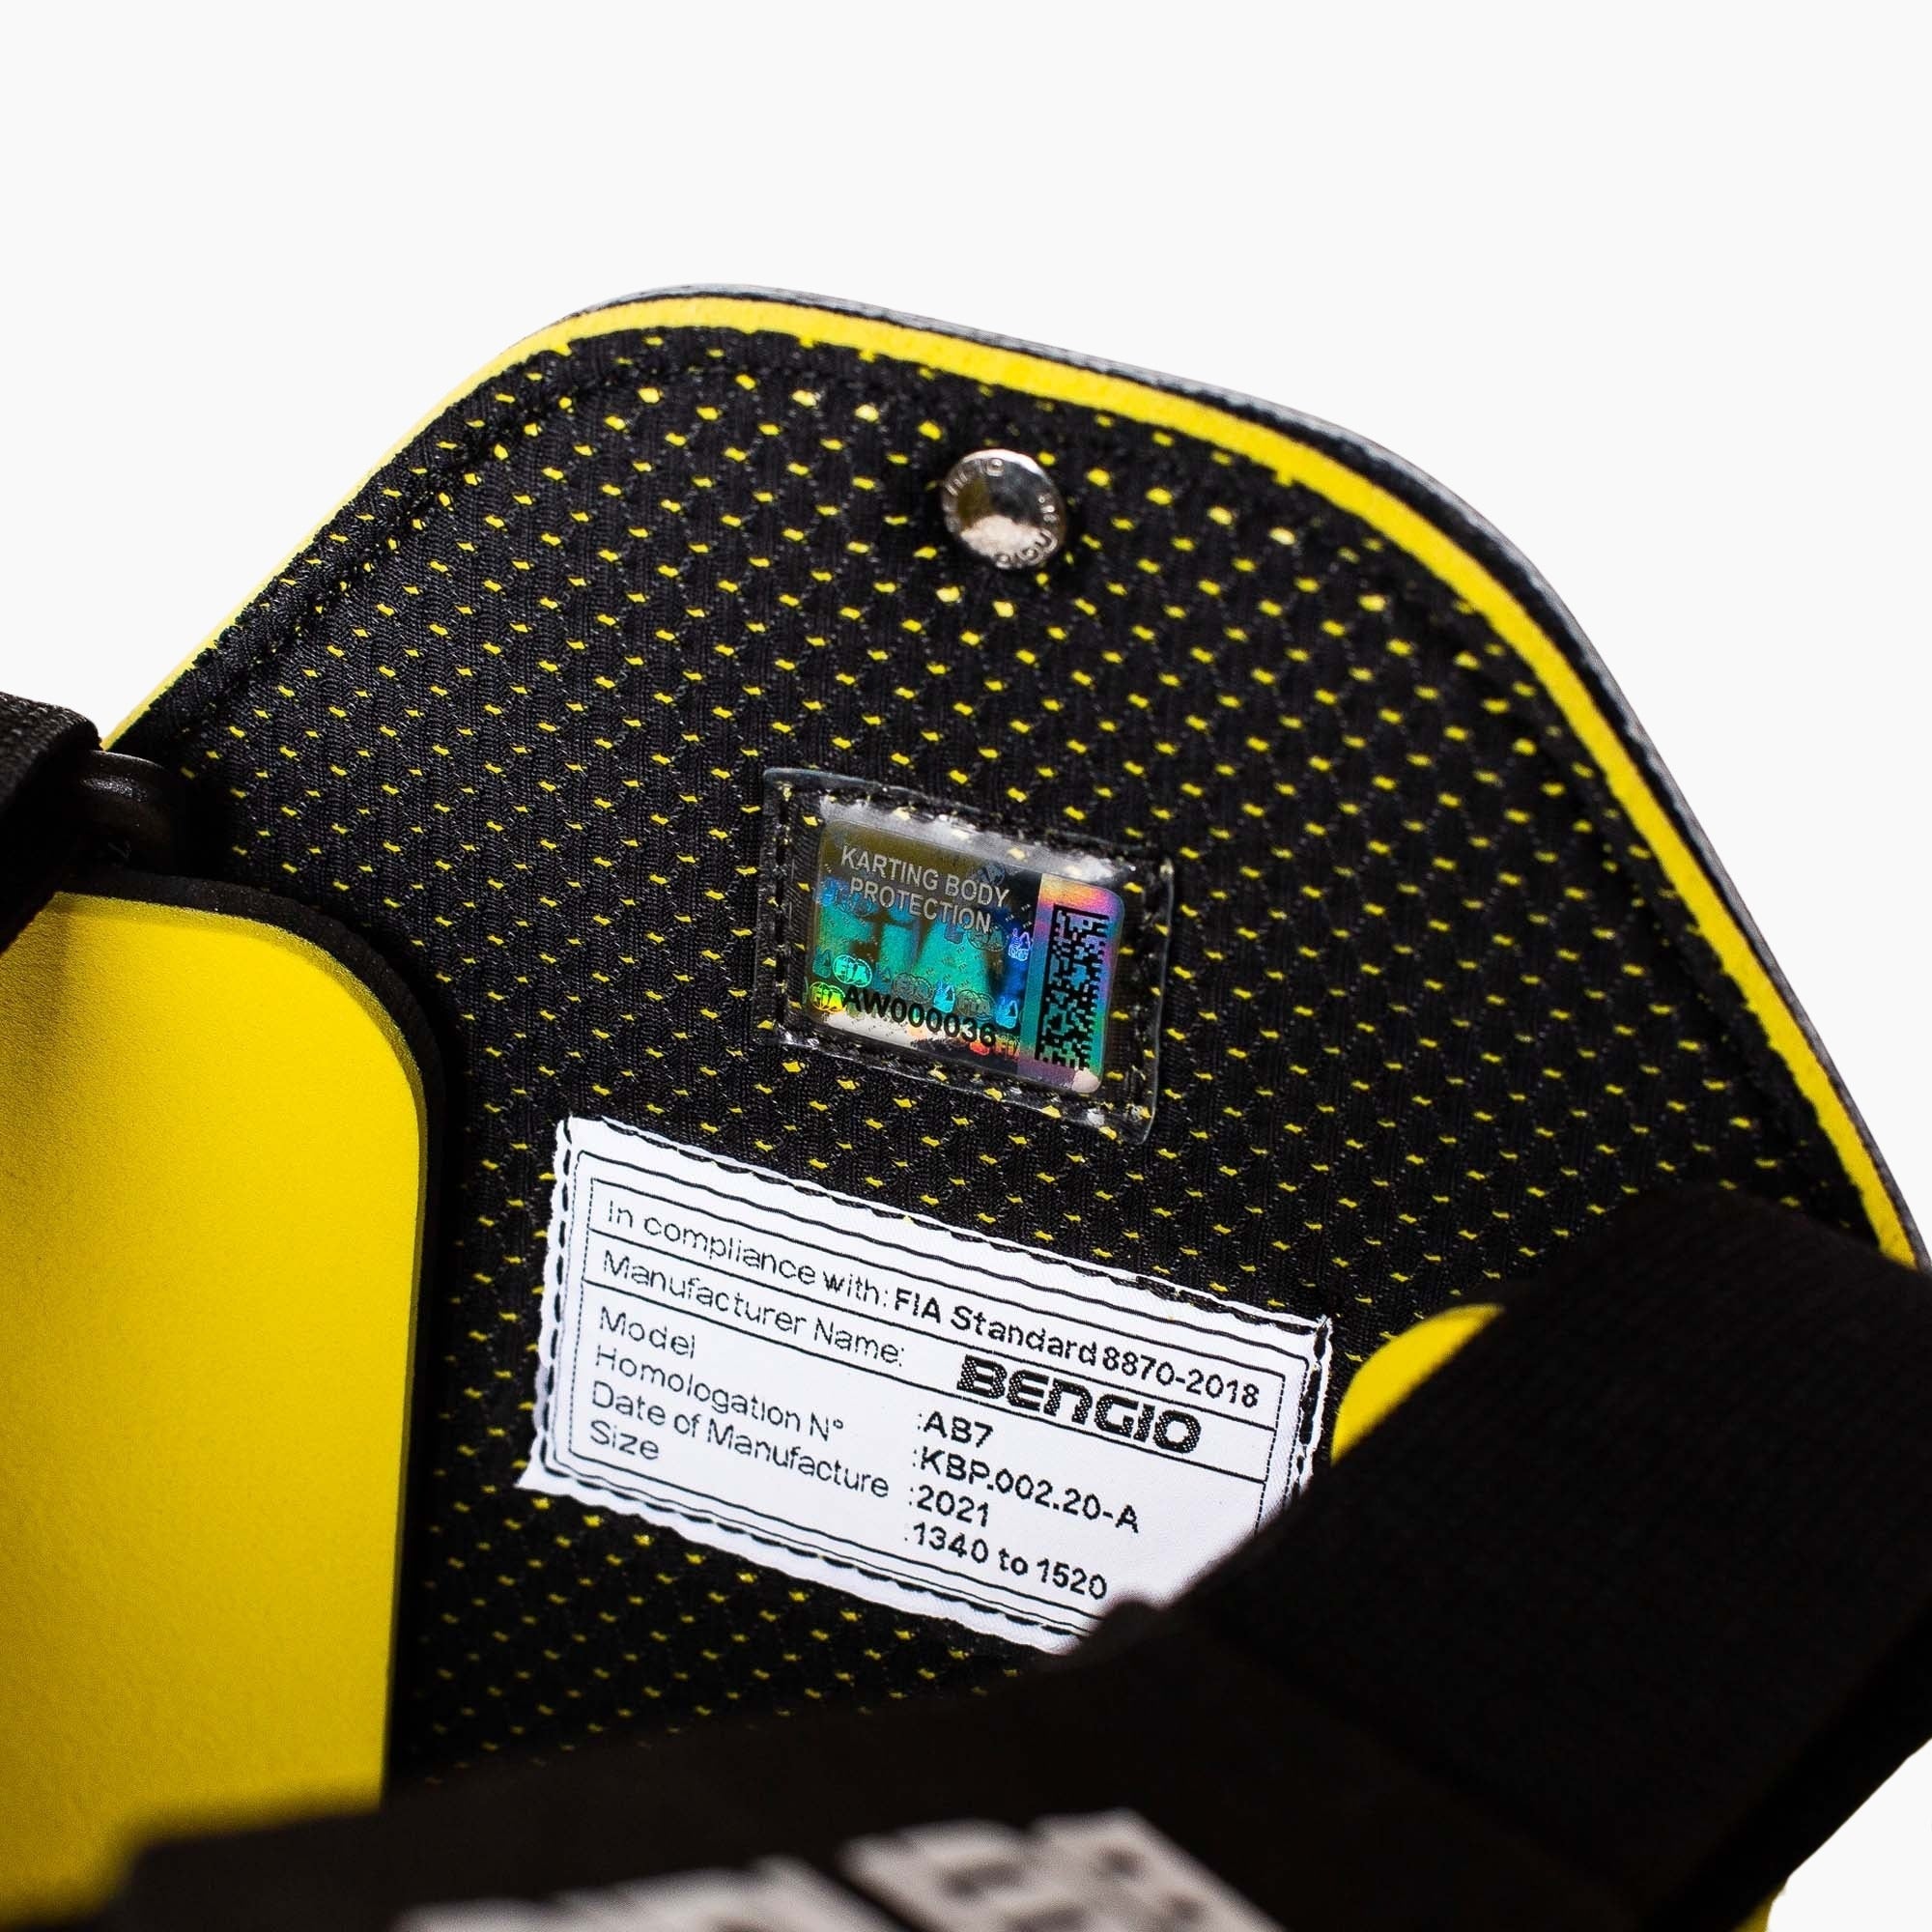 Bengio | Karting Rib Protector AB7-Rib Protector-Bengio HST-gpx-store